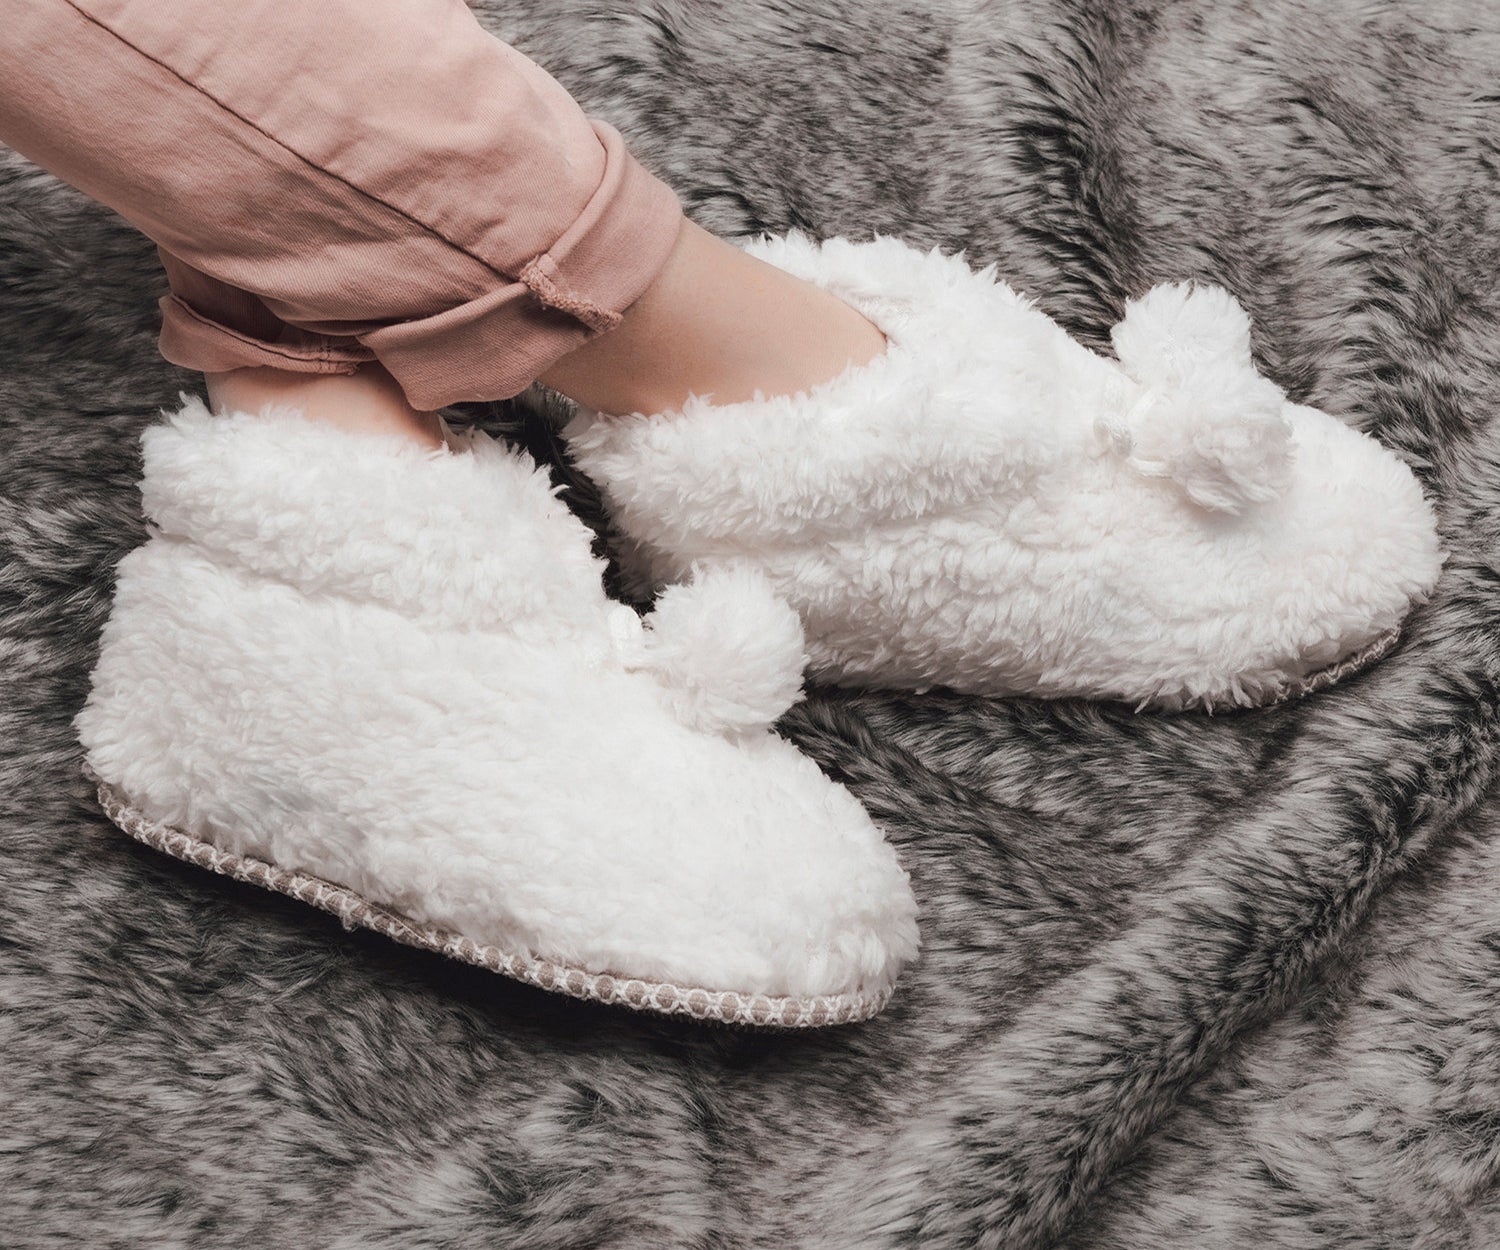 The fuzzy slipper booties with pom poms